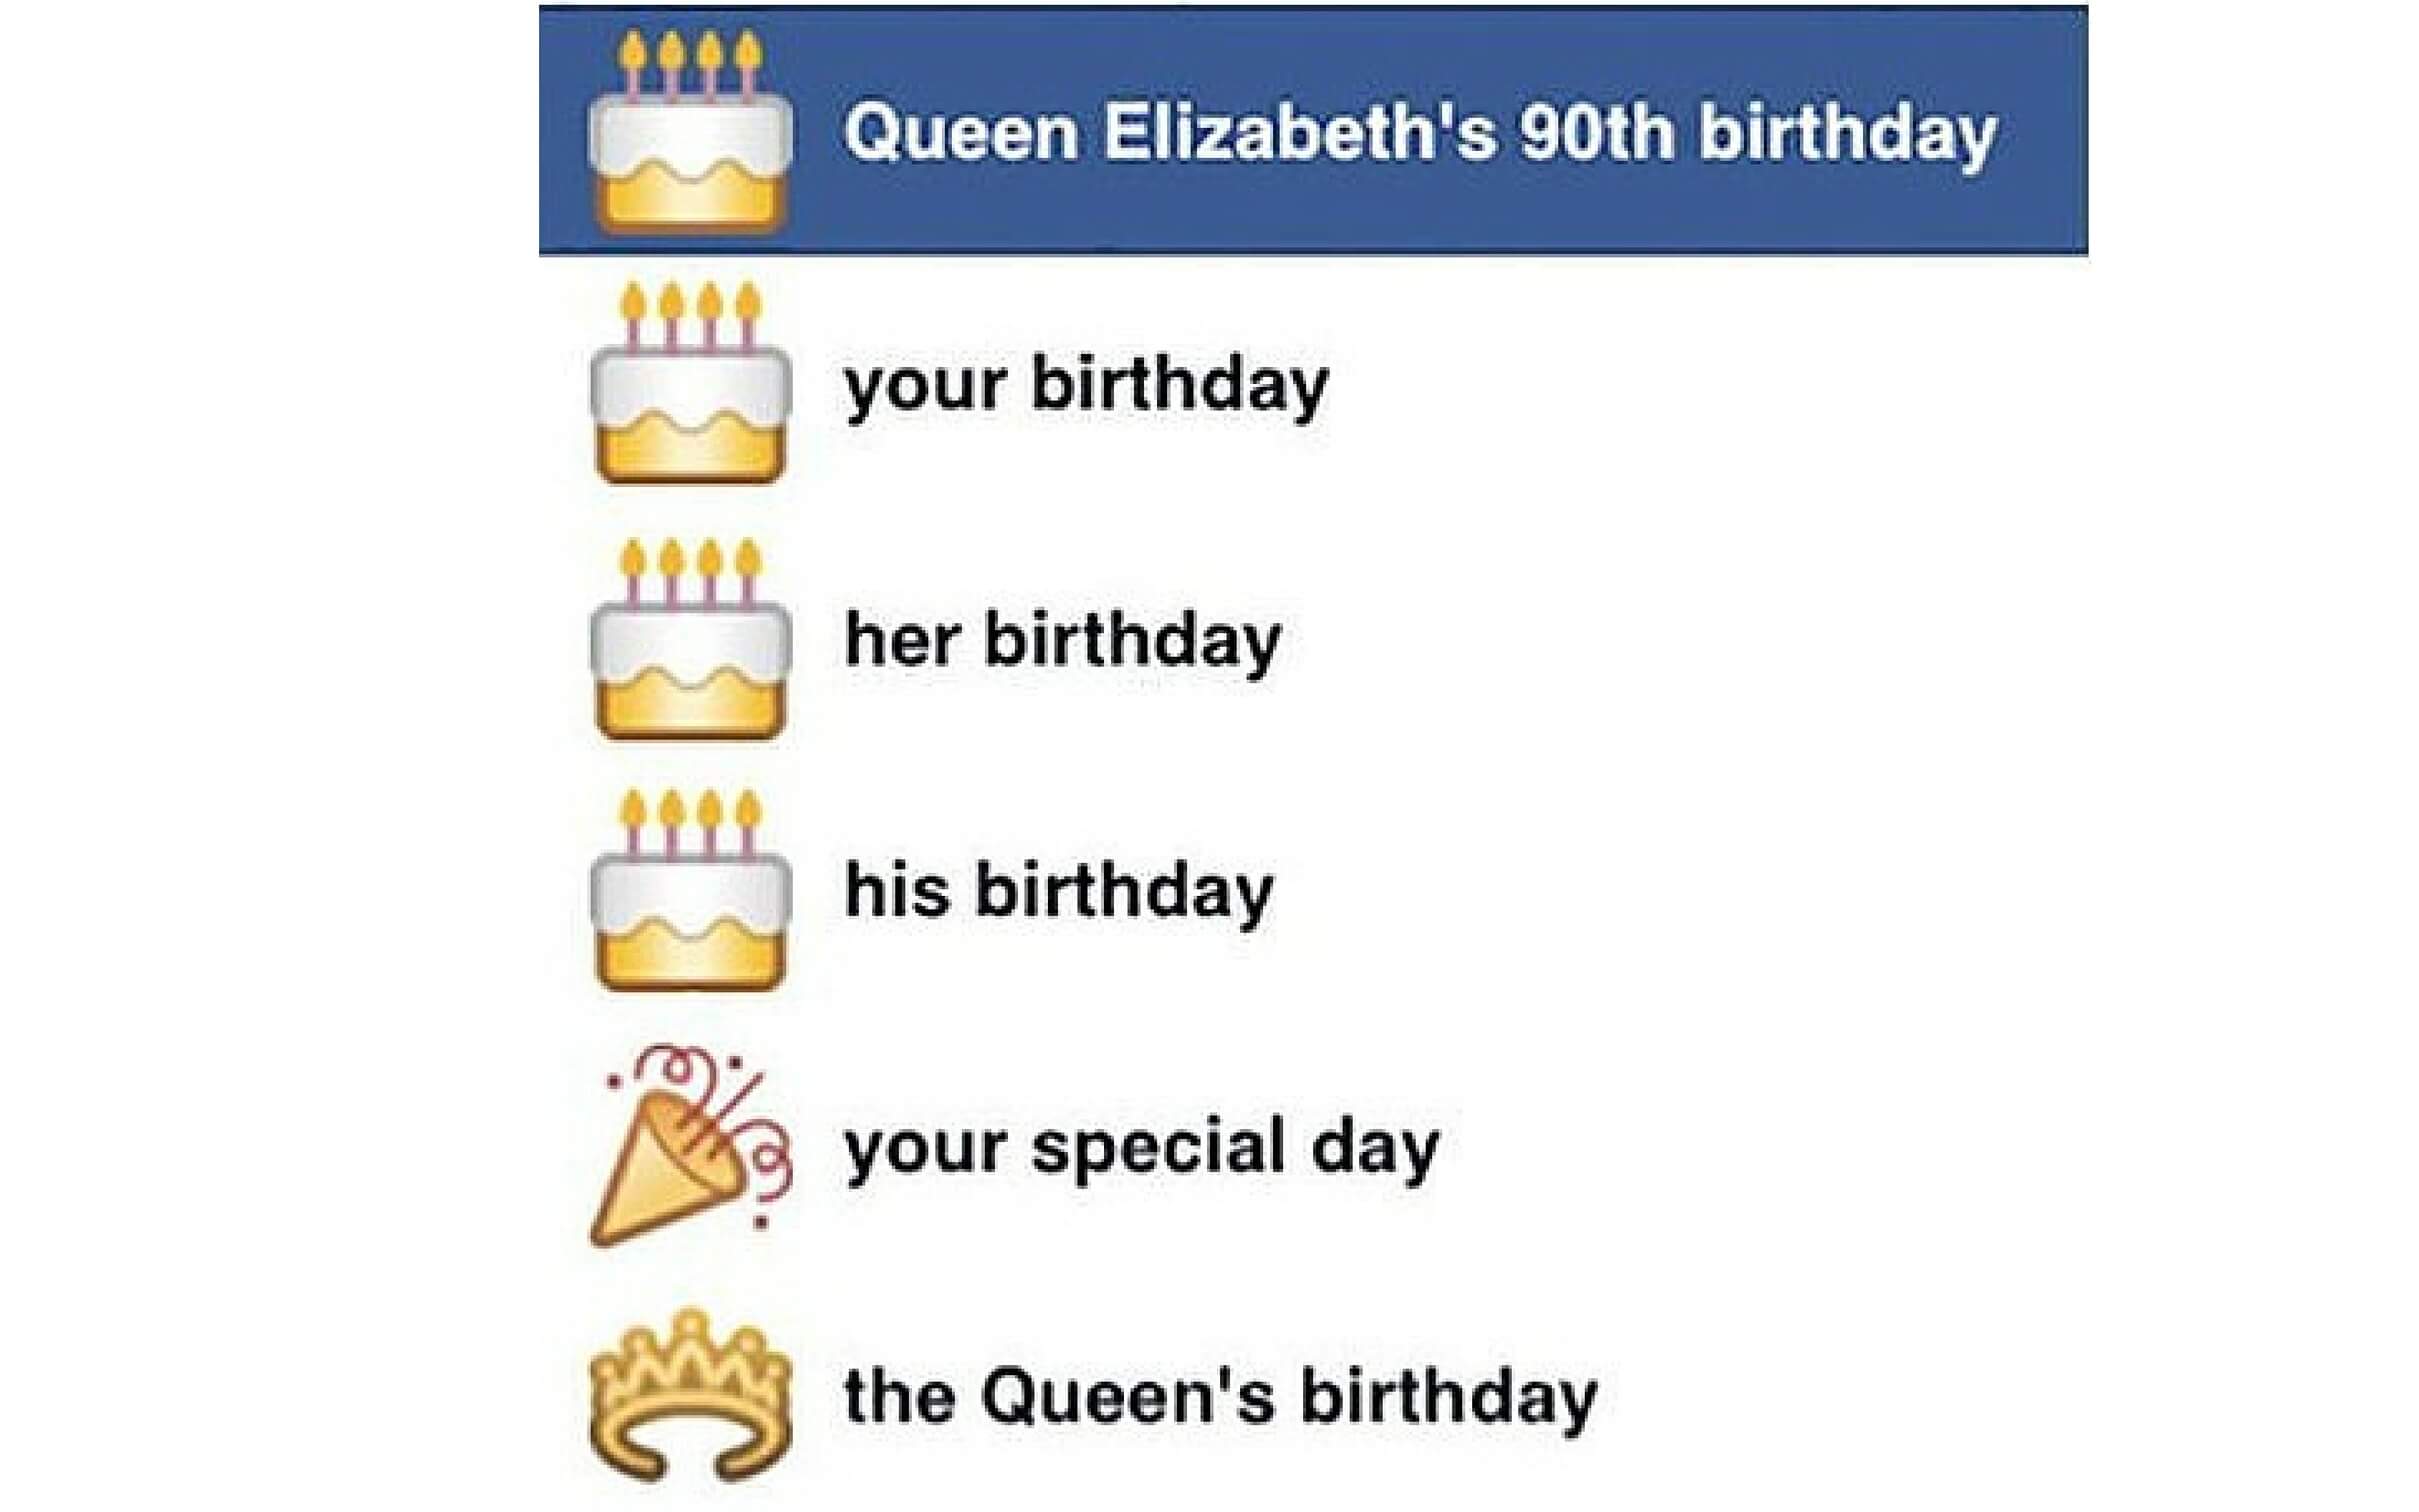 The Queen's birthday